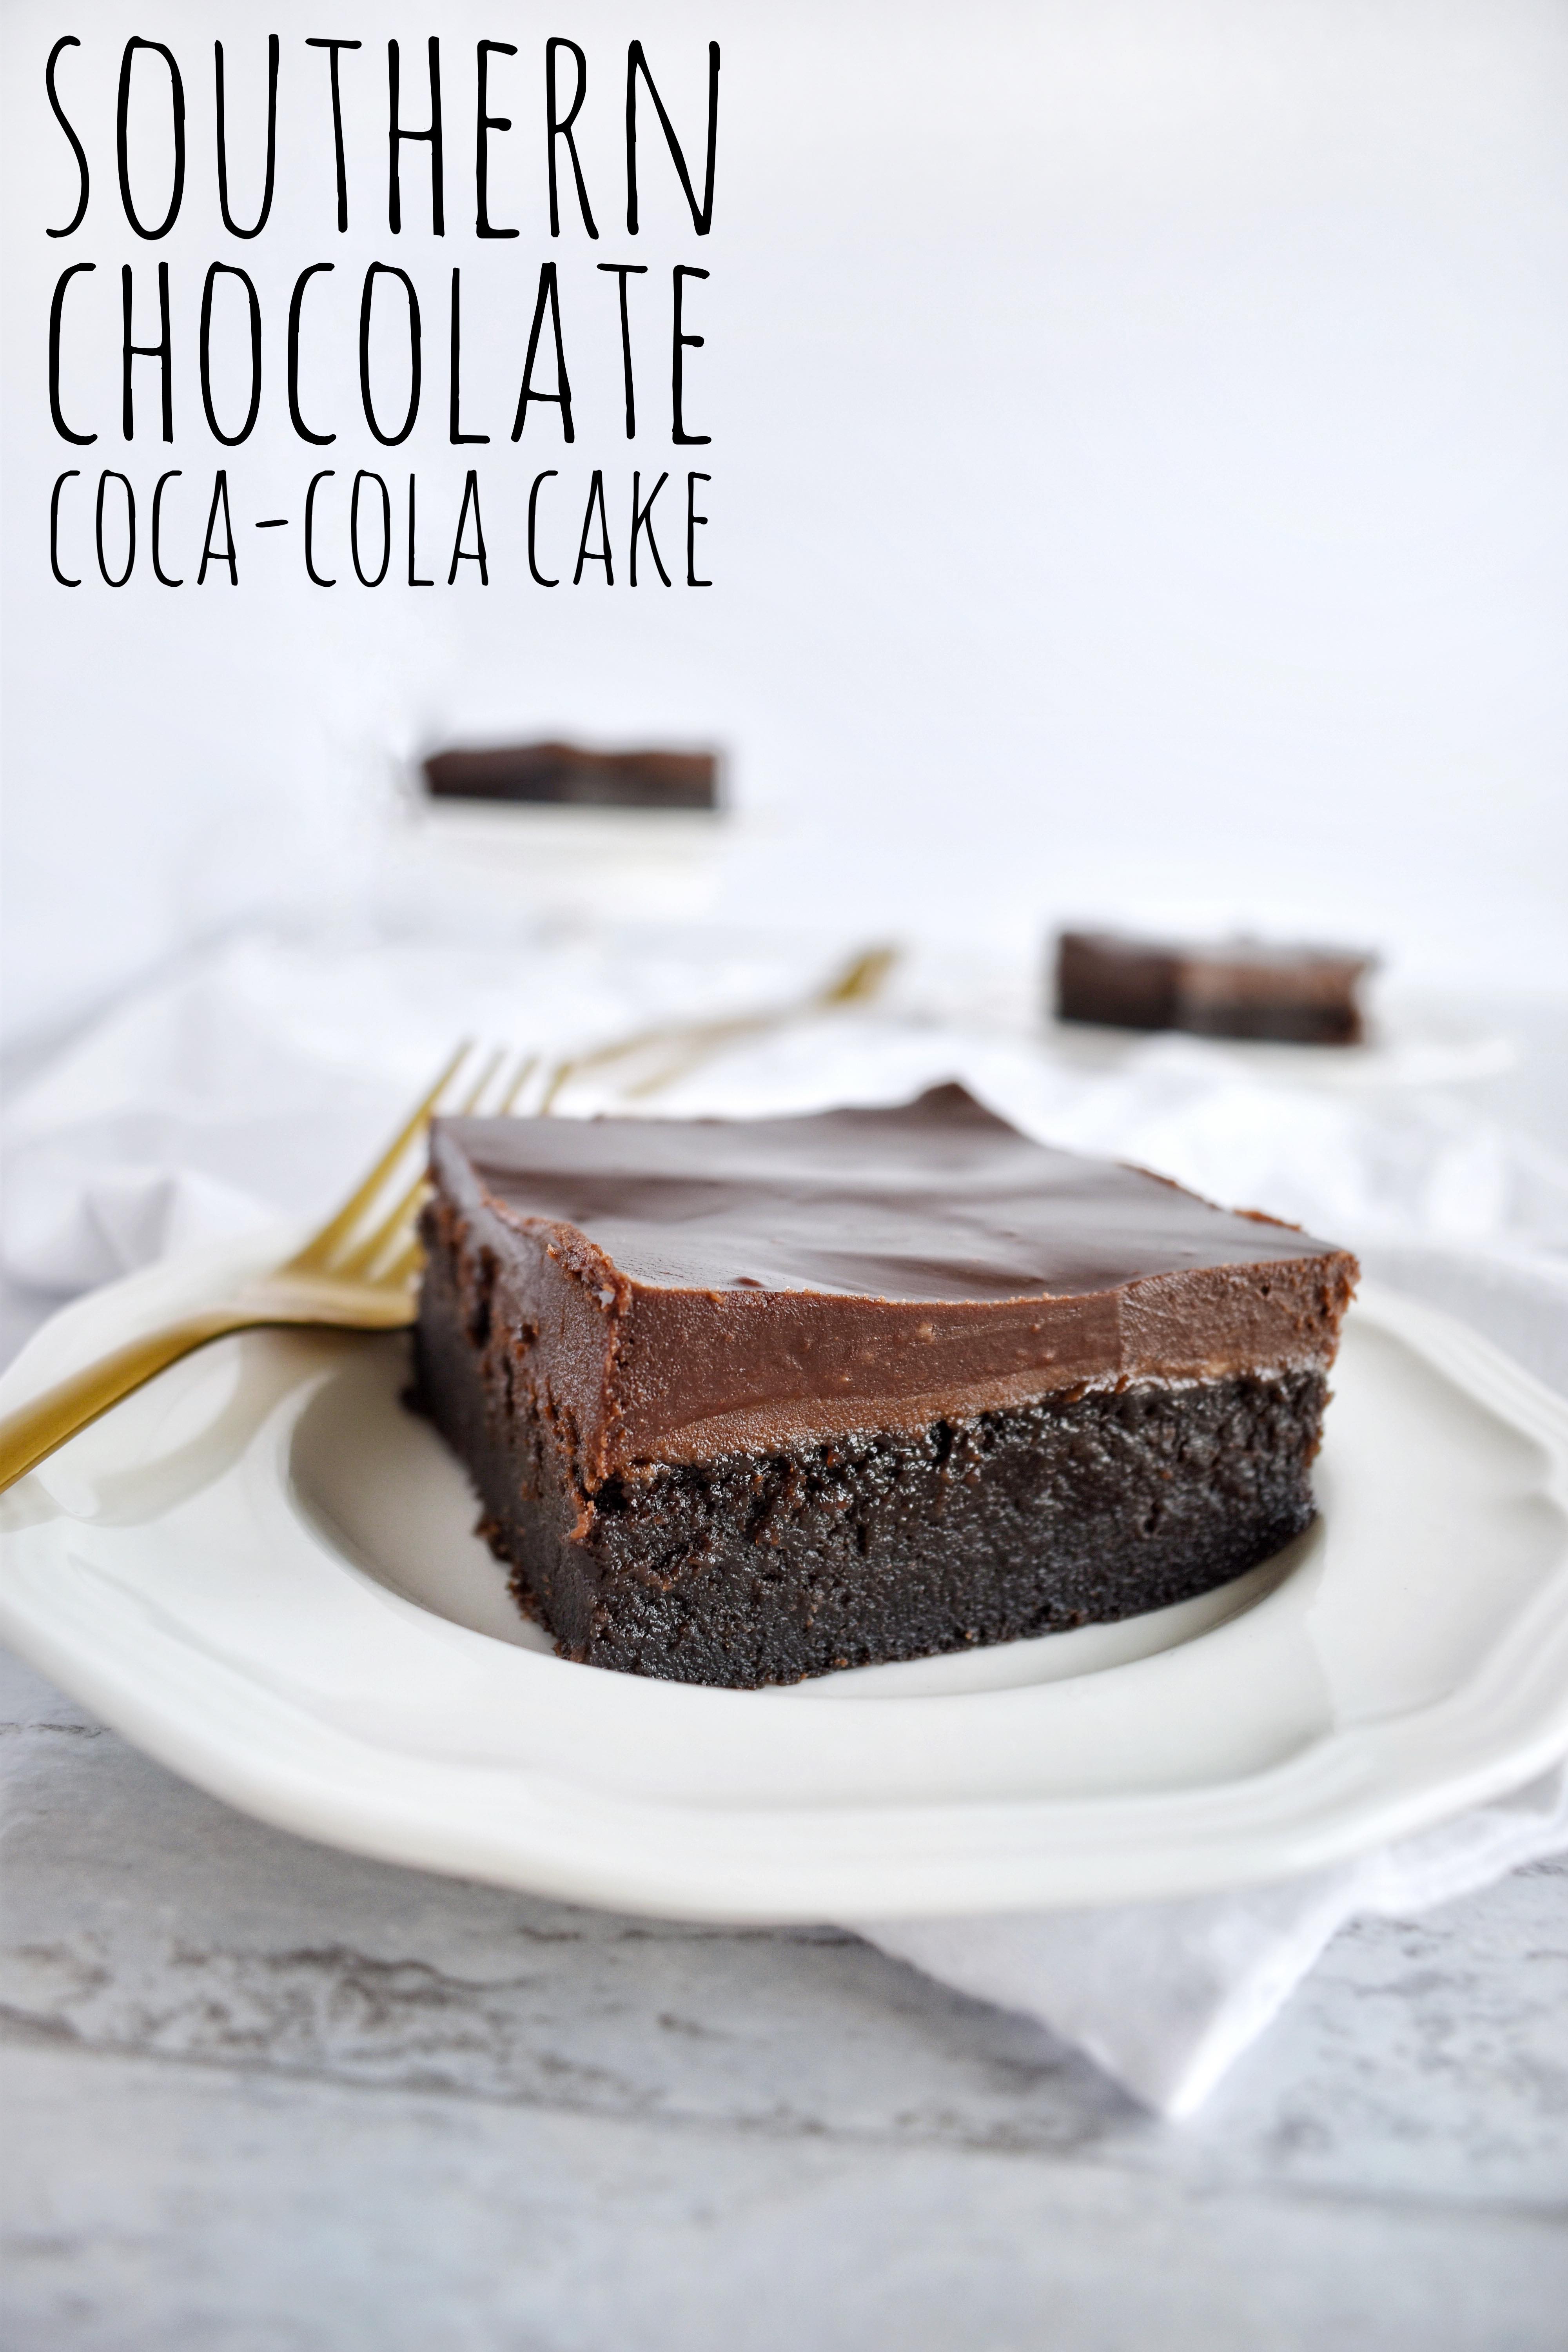 Southern coca-cola chocolate cake